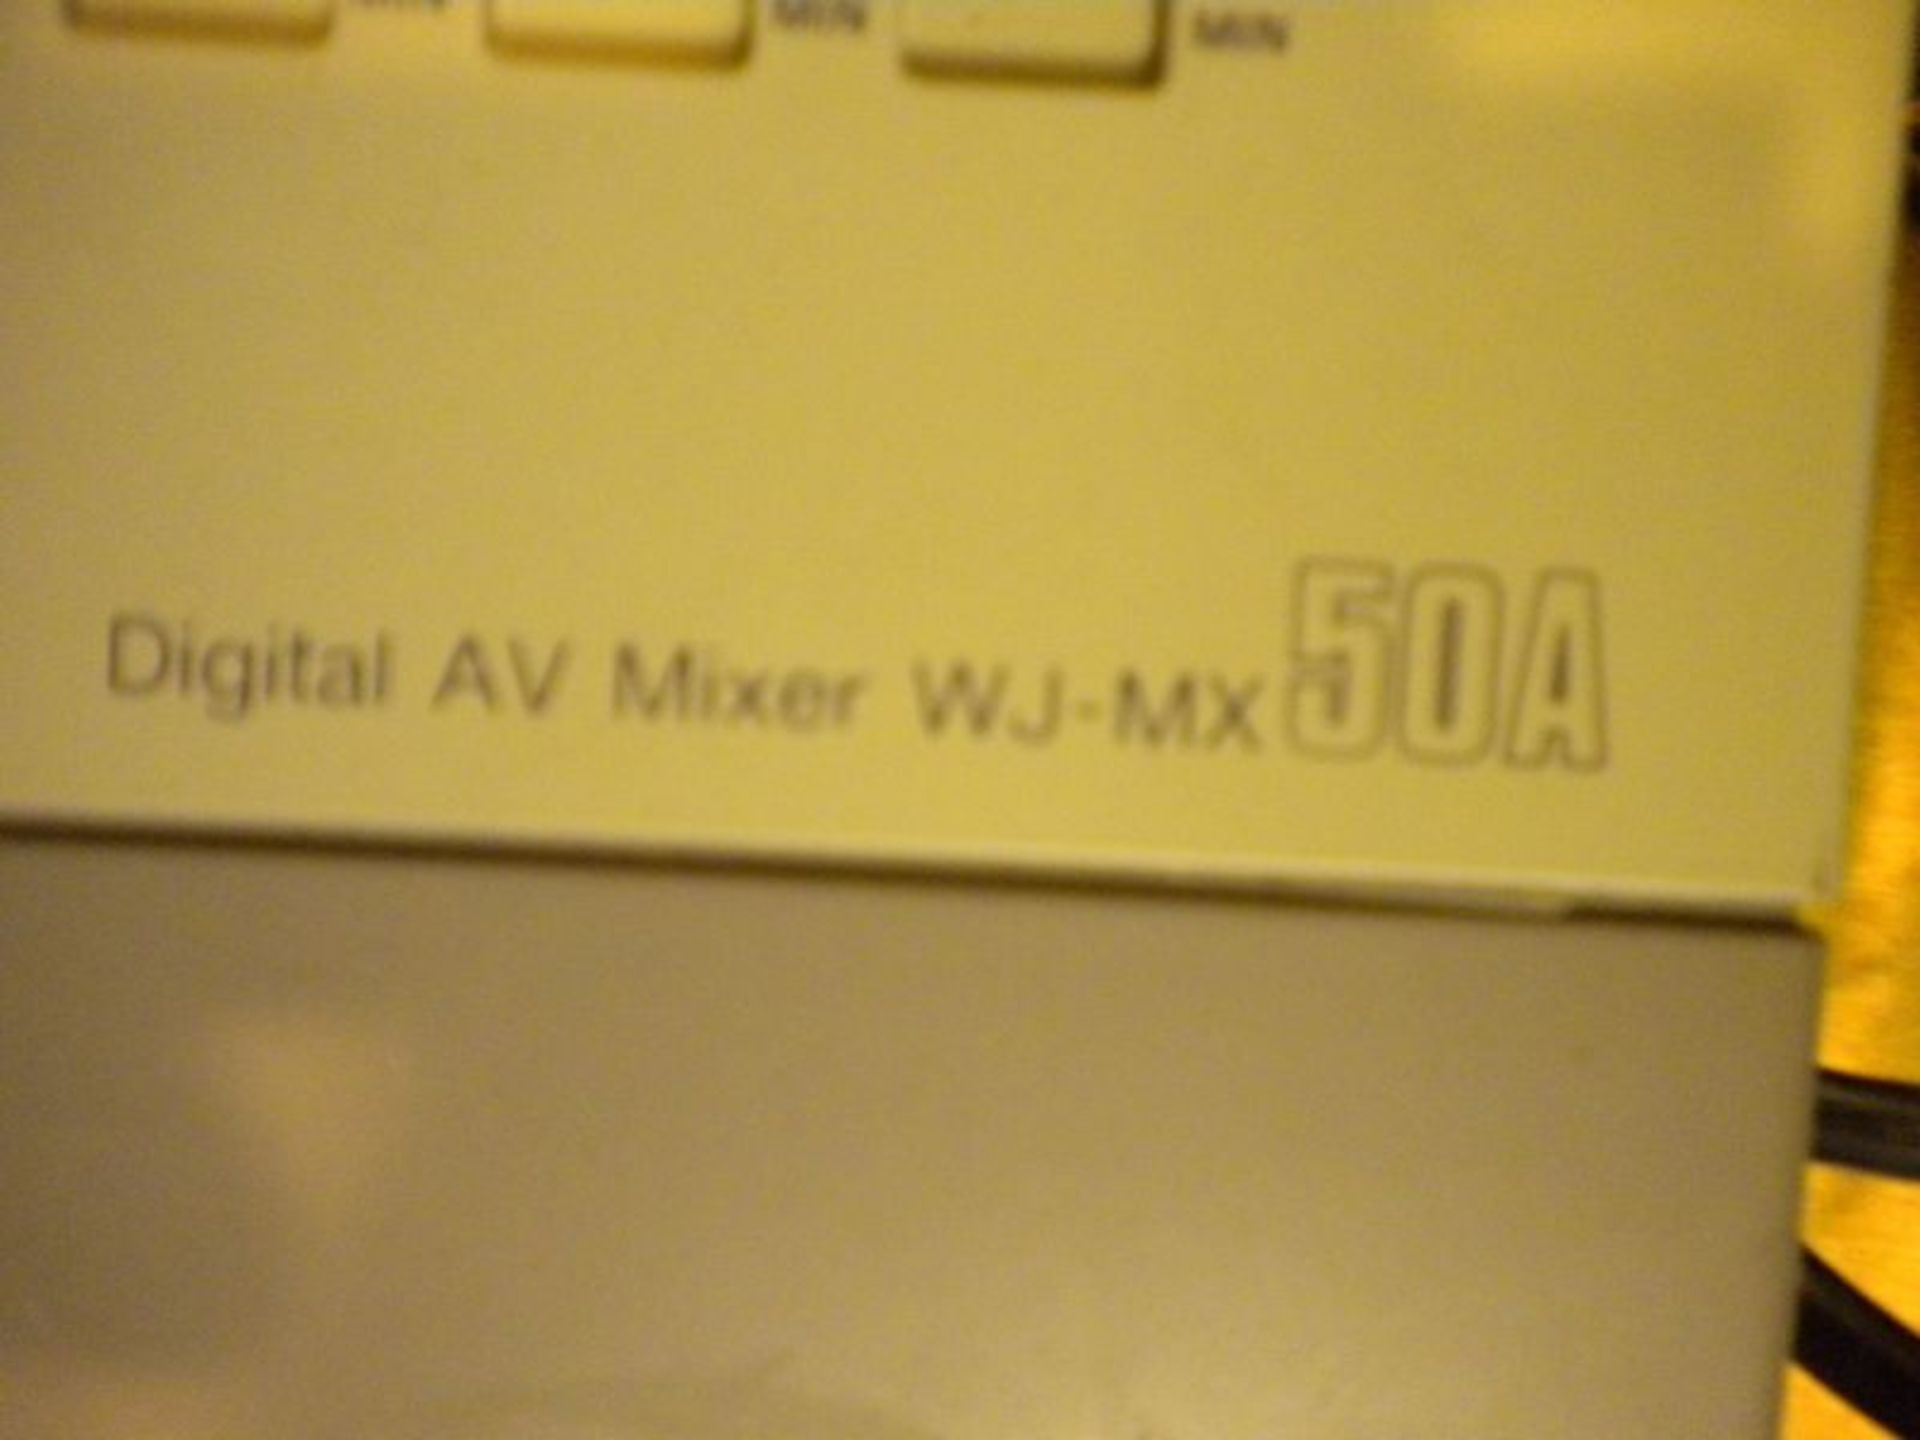 2 PANASONIC DIGITAL AV MIXER WJ-MX50A (LOCATED AT 6901 ARDMORE AVE. FORT WAYNE, IN 46809) - Image 5 of 5